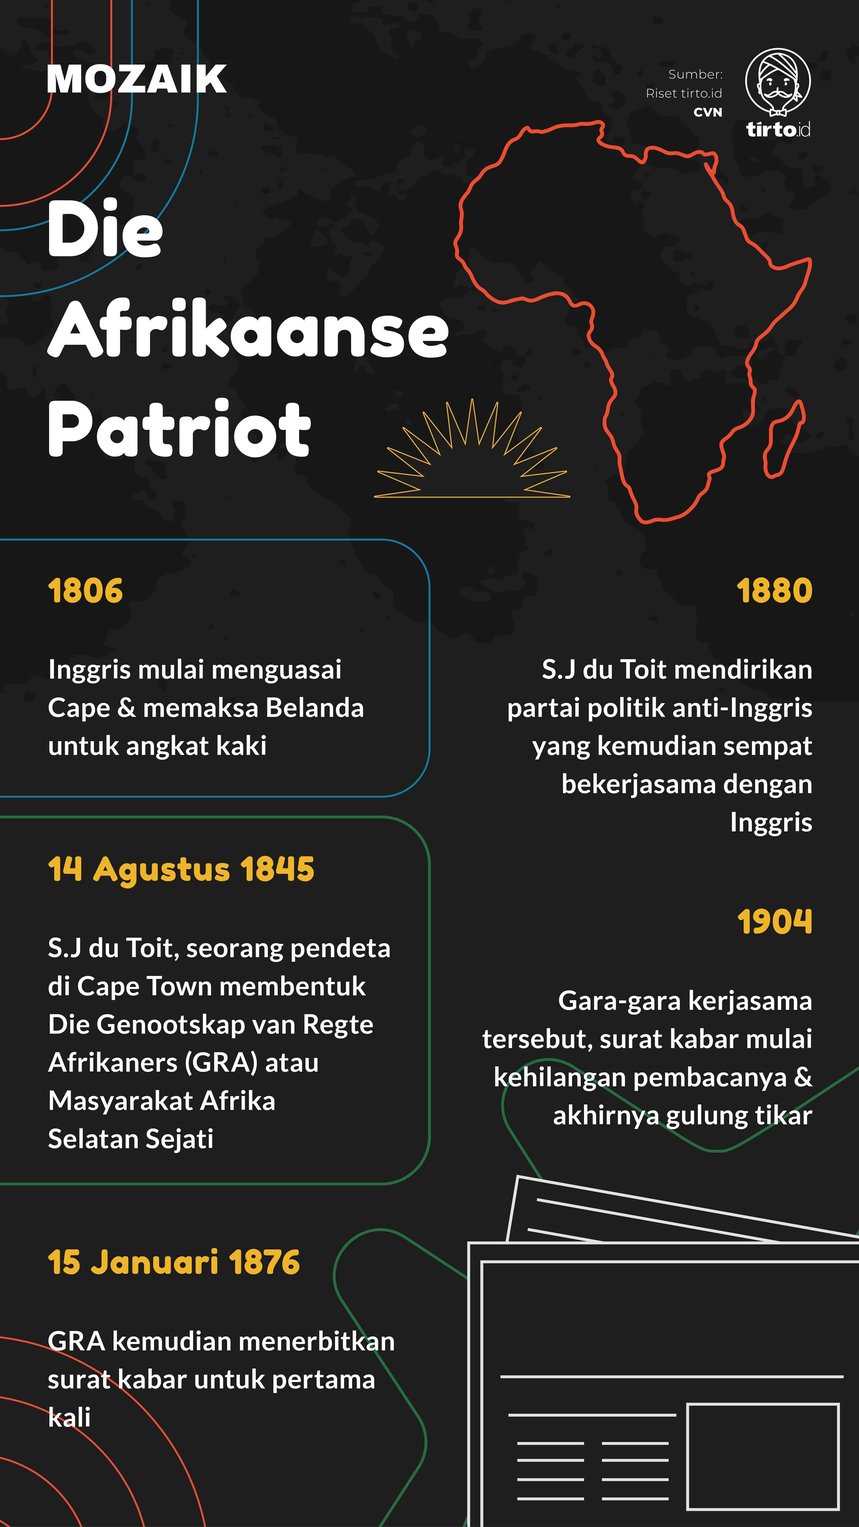 Infografik Mozaik Die Afrikaanse Patriot